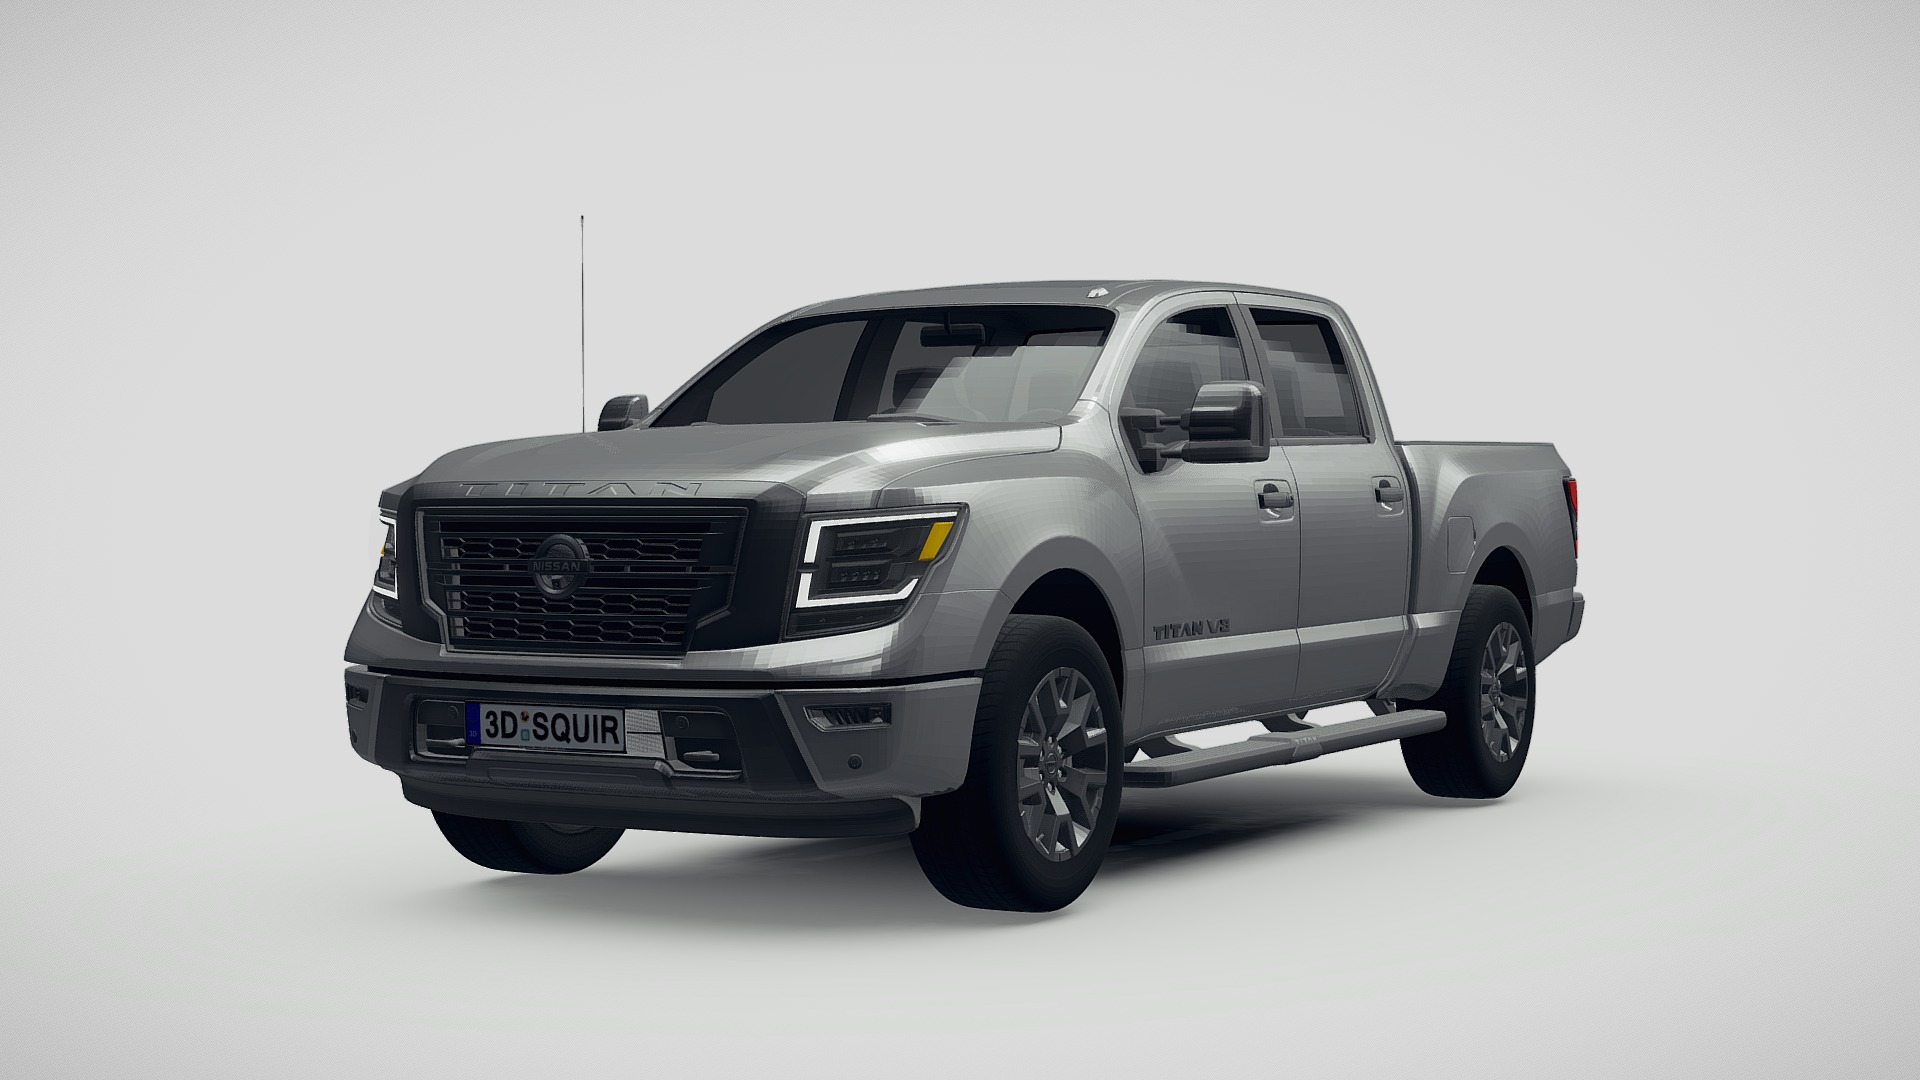 3D model Nissan Titan 2020 - This is a 3D model of the Nissan Titan 2020. The 3D model is about a silver truck with a black top.